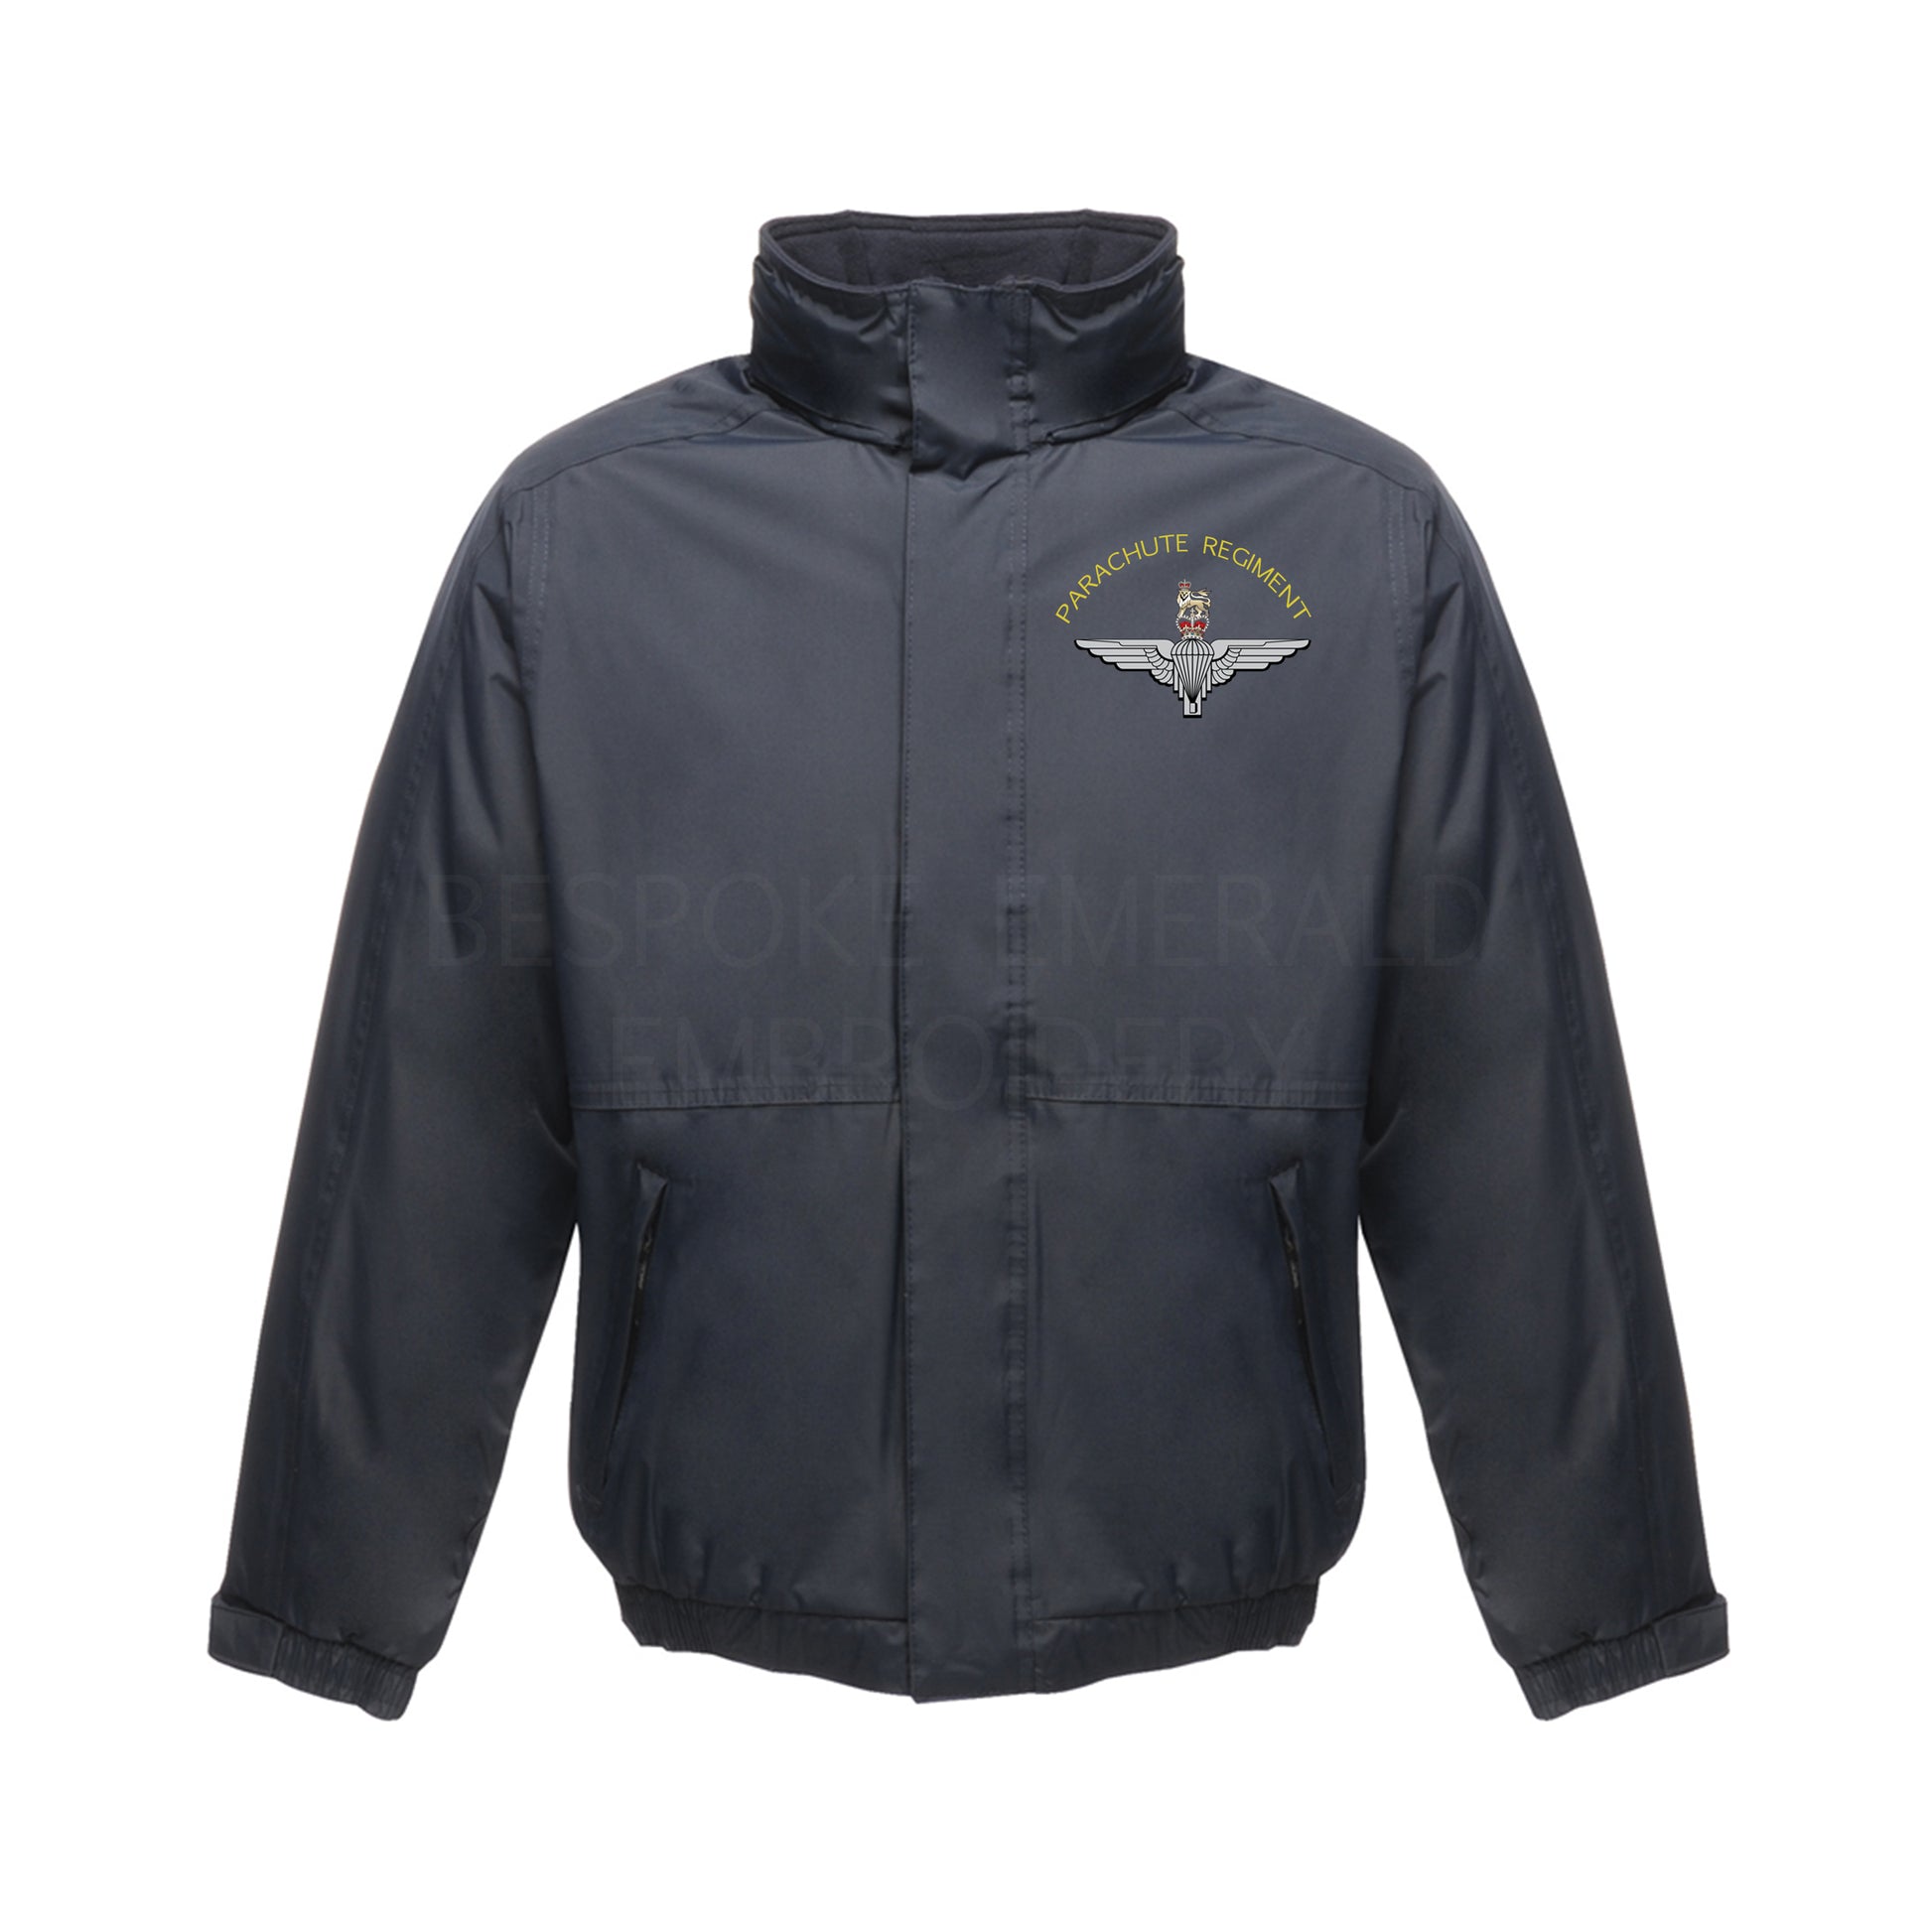 RG045 - Regatta Parachute Regiment Waterproof Jacket. - Bespoke Emerald Embroidery Ltd